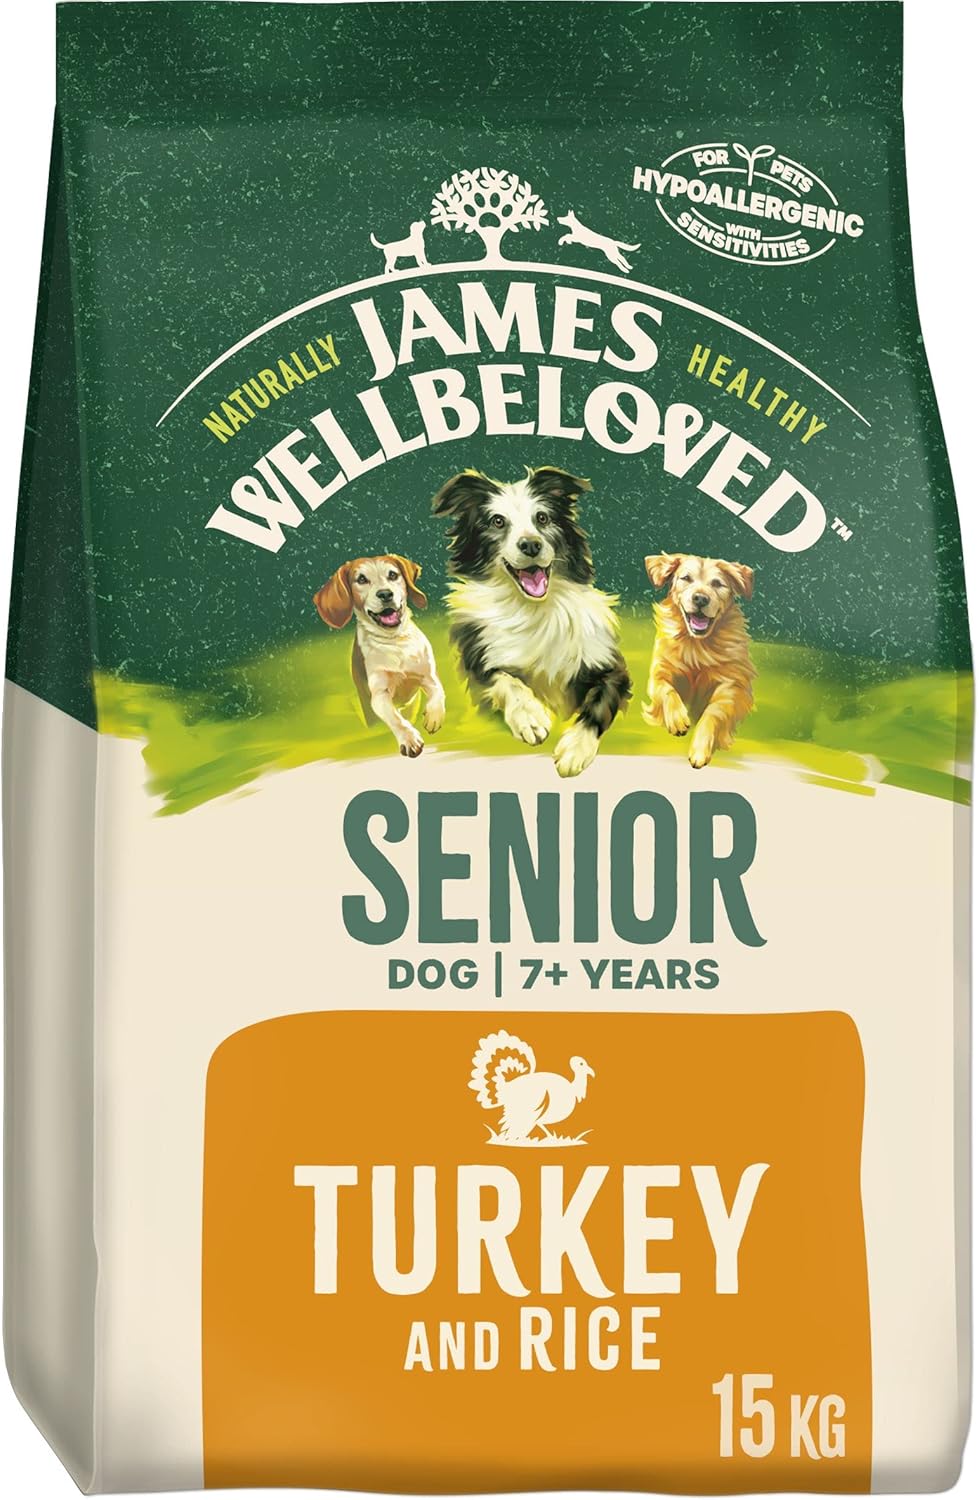 James Wellbeloved Senior Turkey & Rice 15 kg Bag, Hypoallergenic Dry Dog Food?02JTRS1